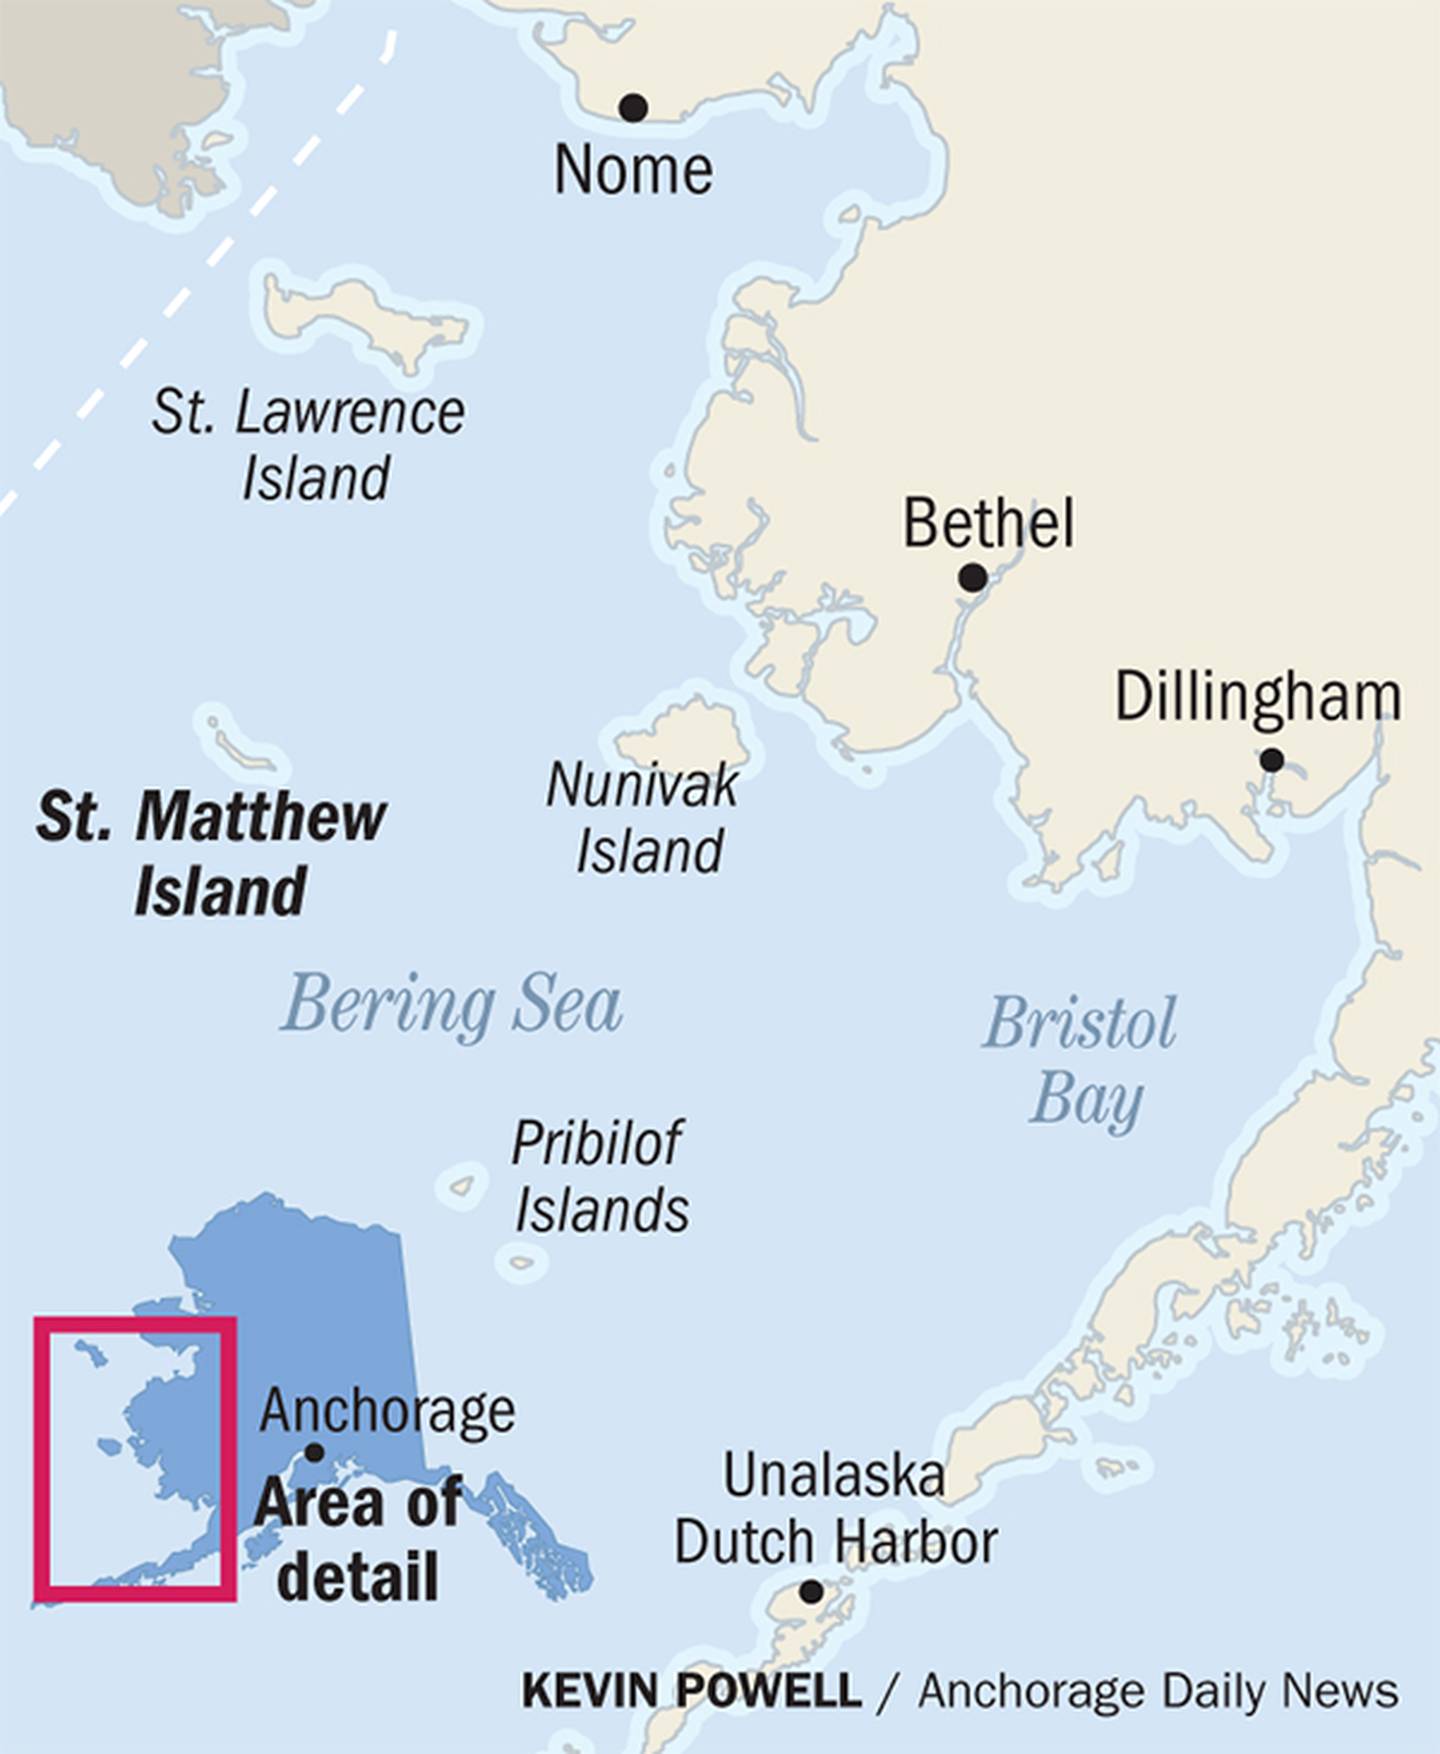 St. Matthew Island